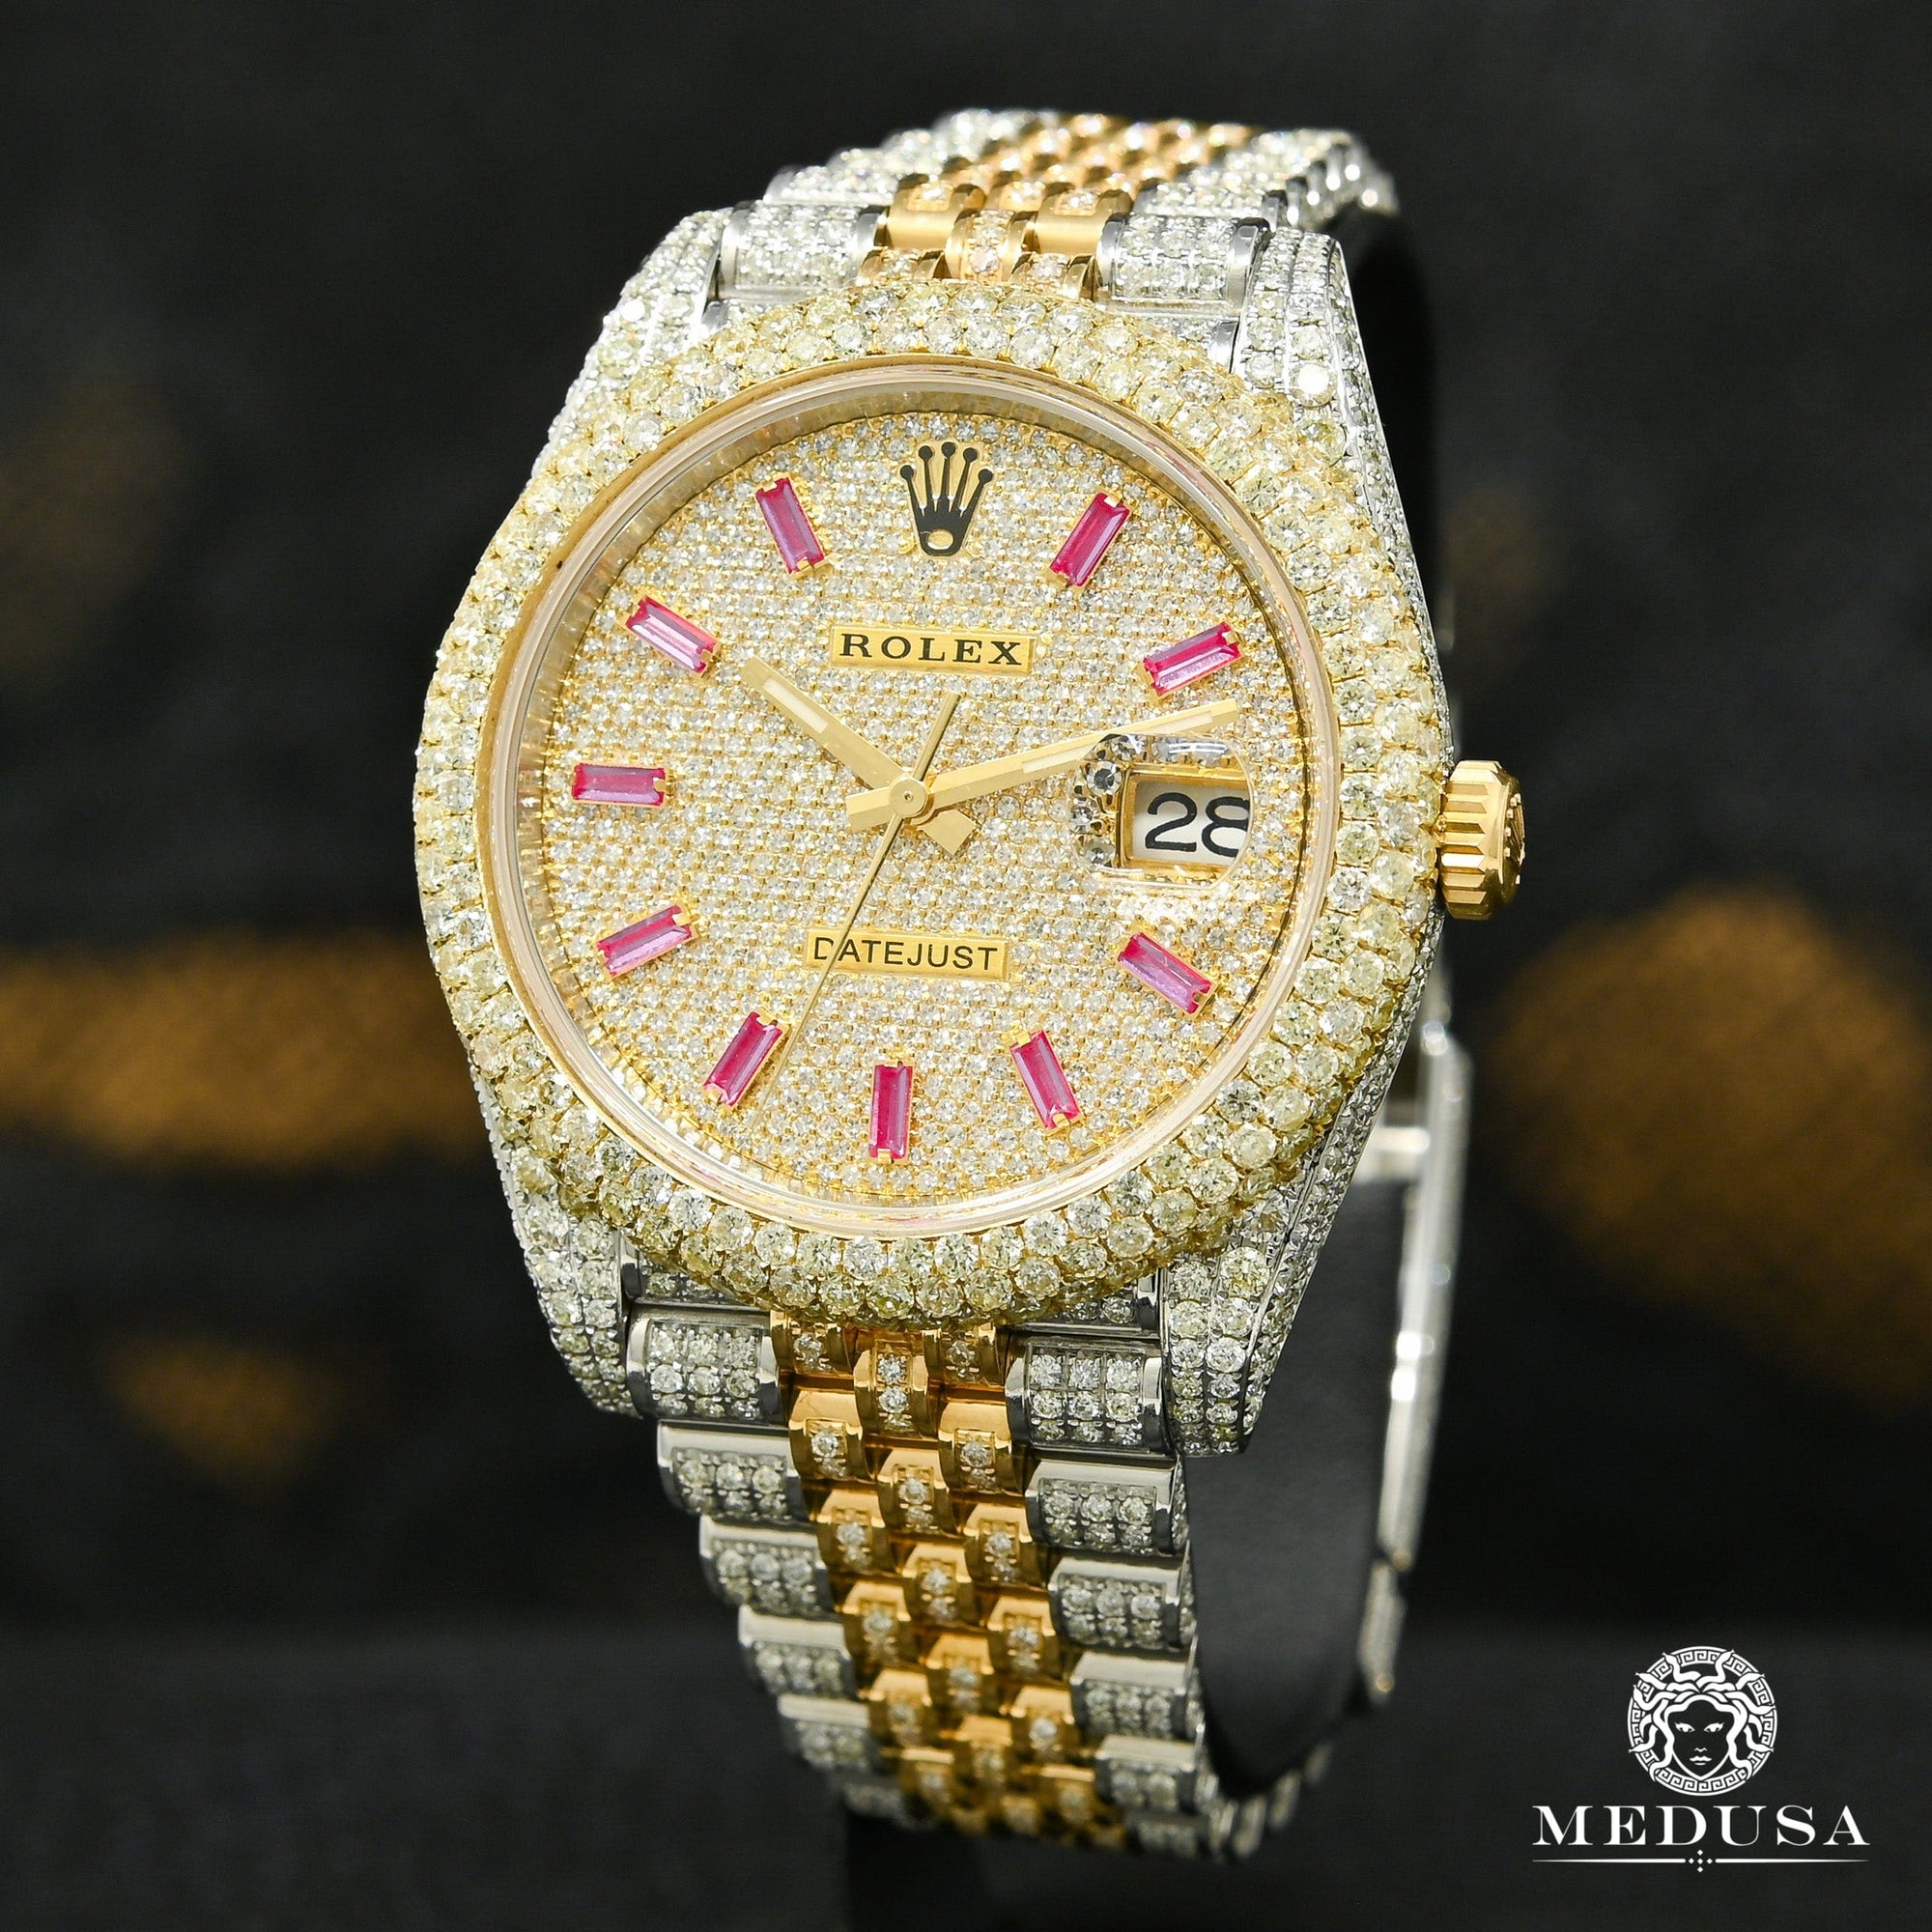 Rolex watch | Rolex Datejust Men's Watch 41mm - 2 Tones Full Honeycomb Ruby Baguette Gold 2 Tones